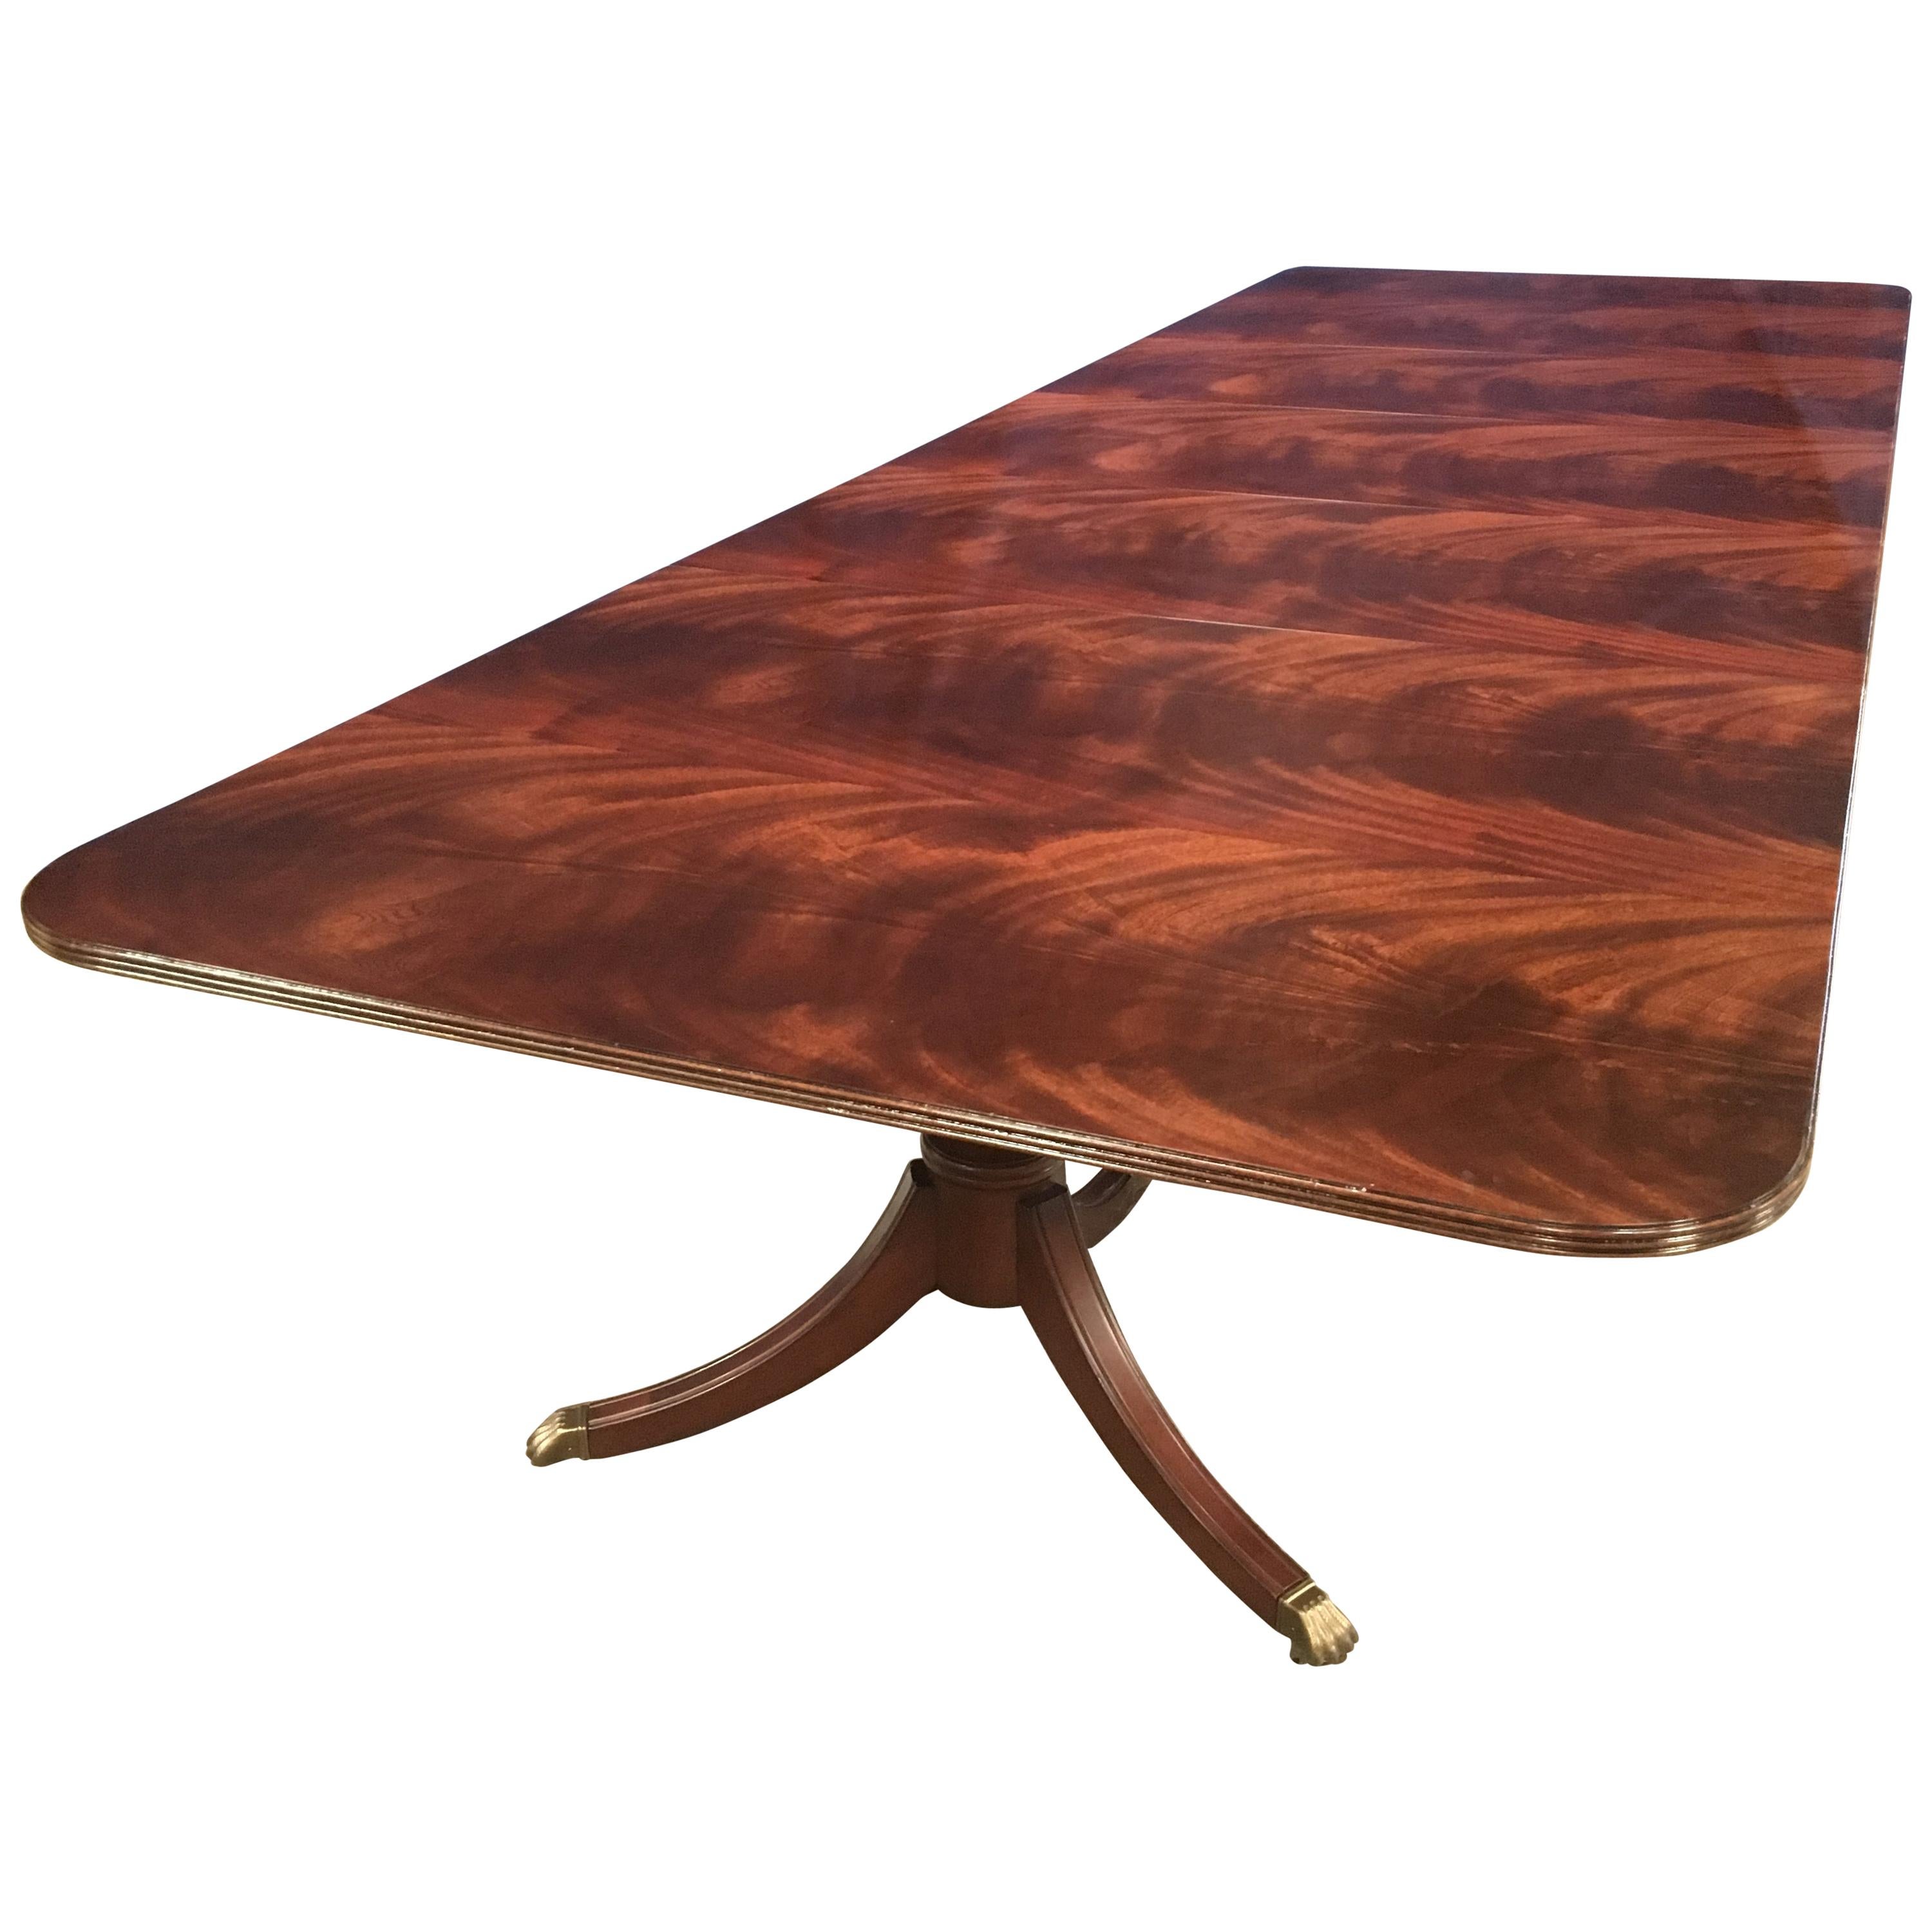 Custom Large Crotch Mahogany Georgian Style Dining Table by Leighton Hall For Sale